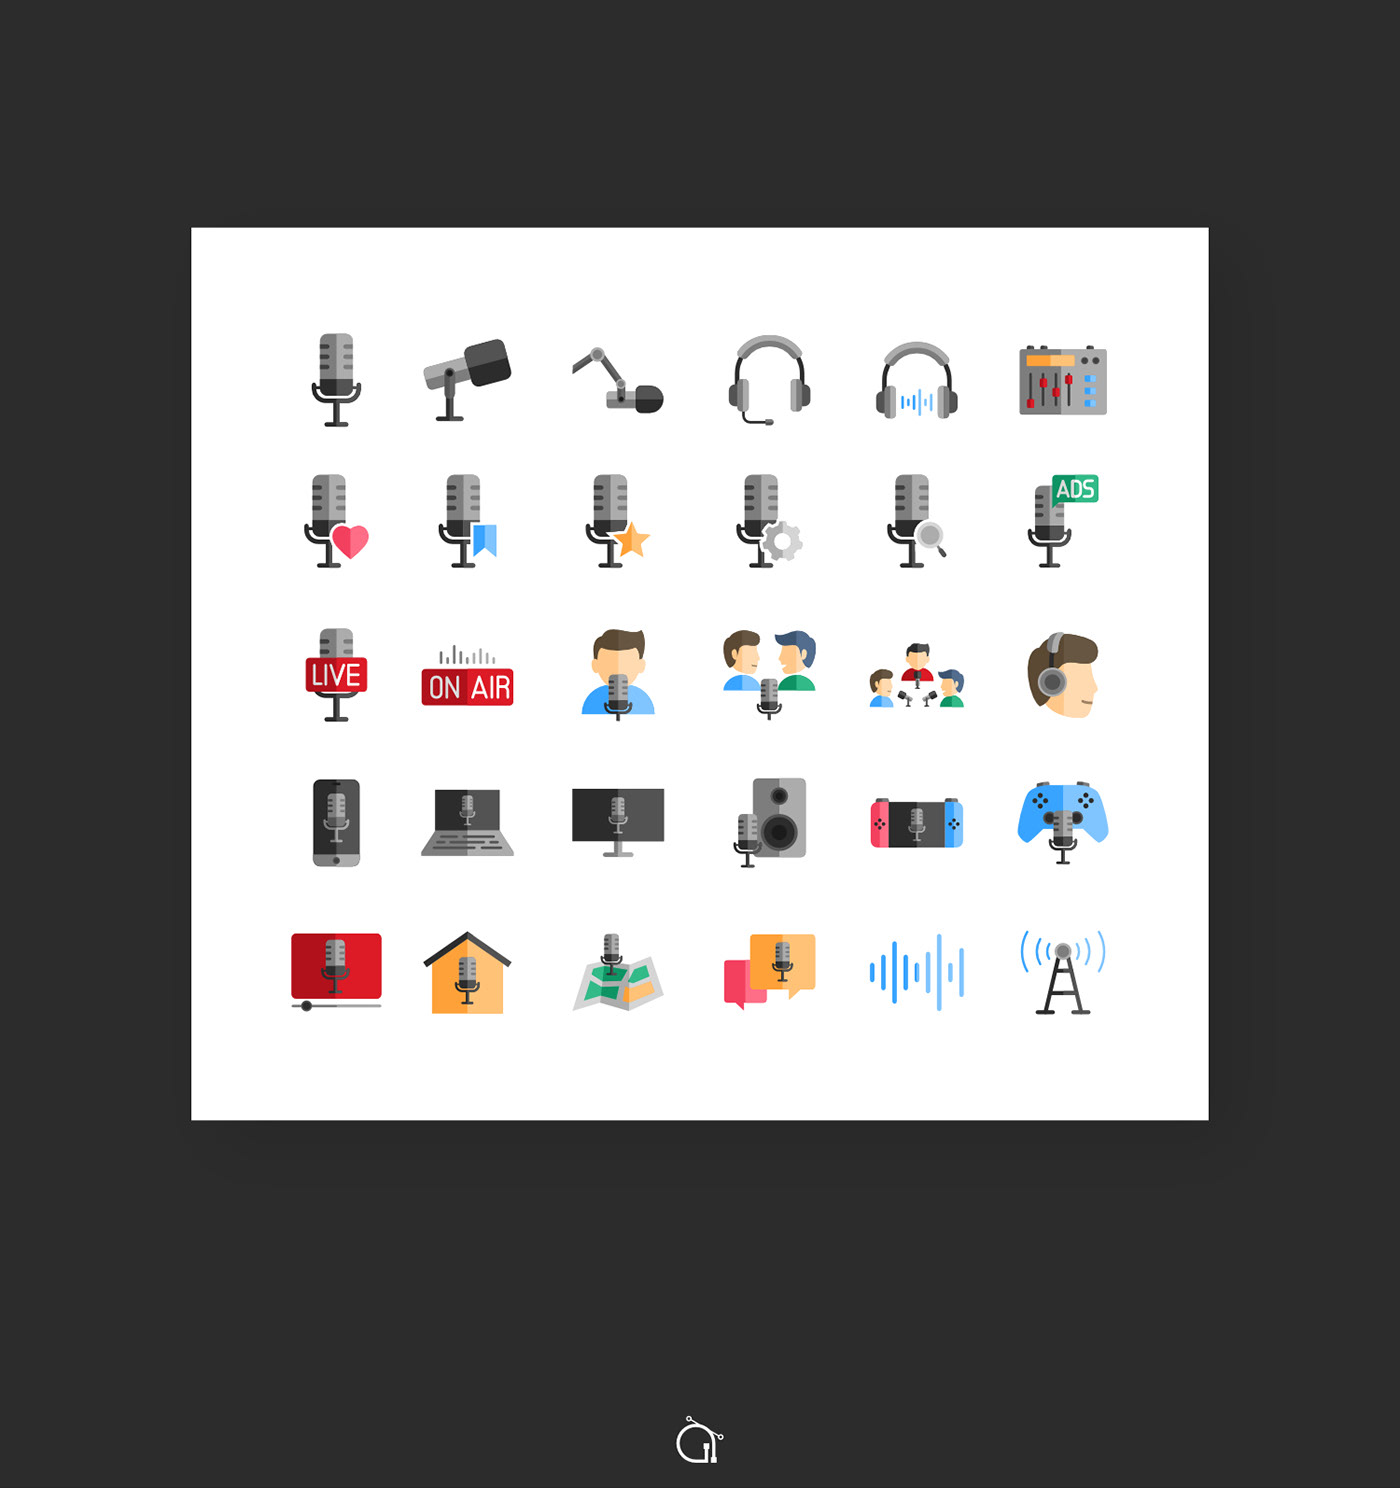 Audio broadcast icons icons pack icons set podcast Radio sound Streaming UI